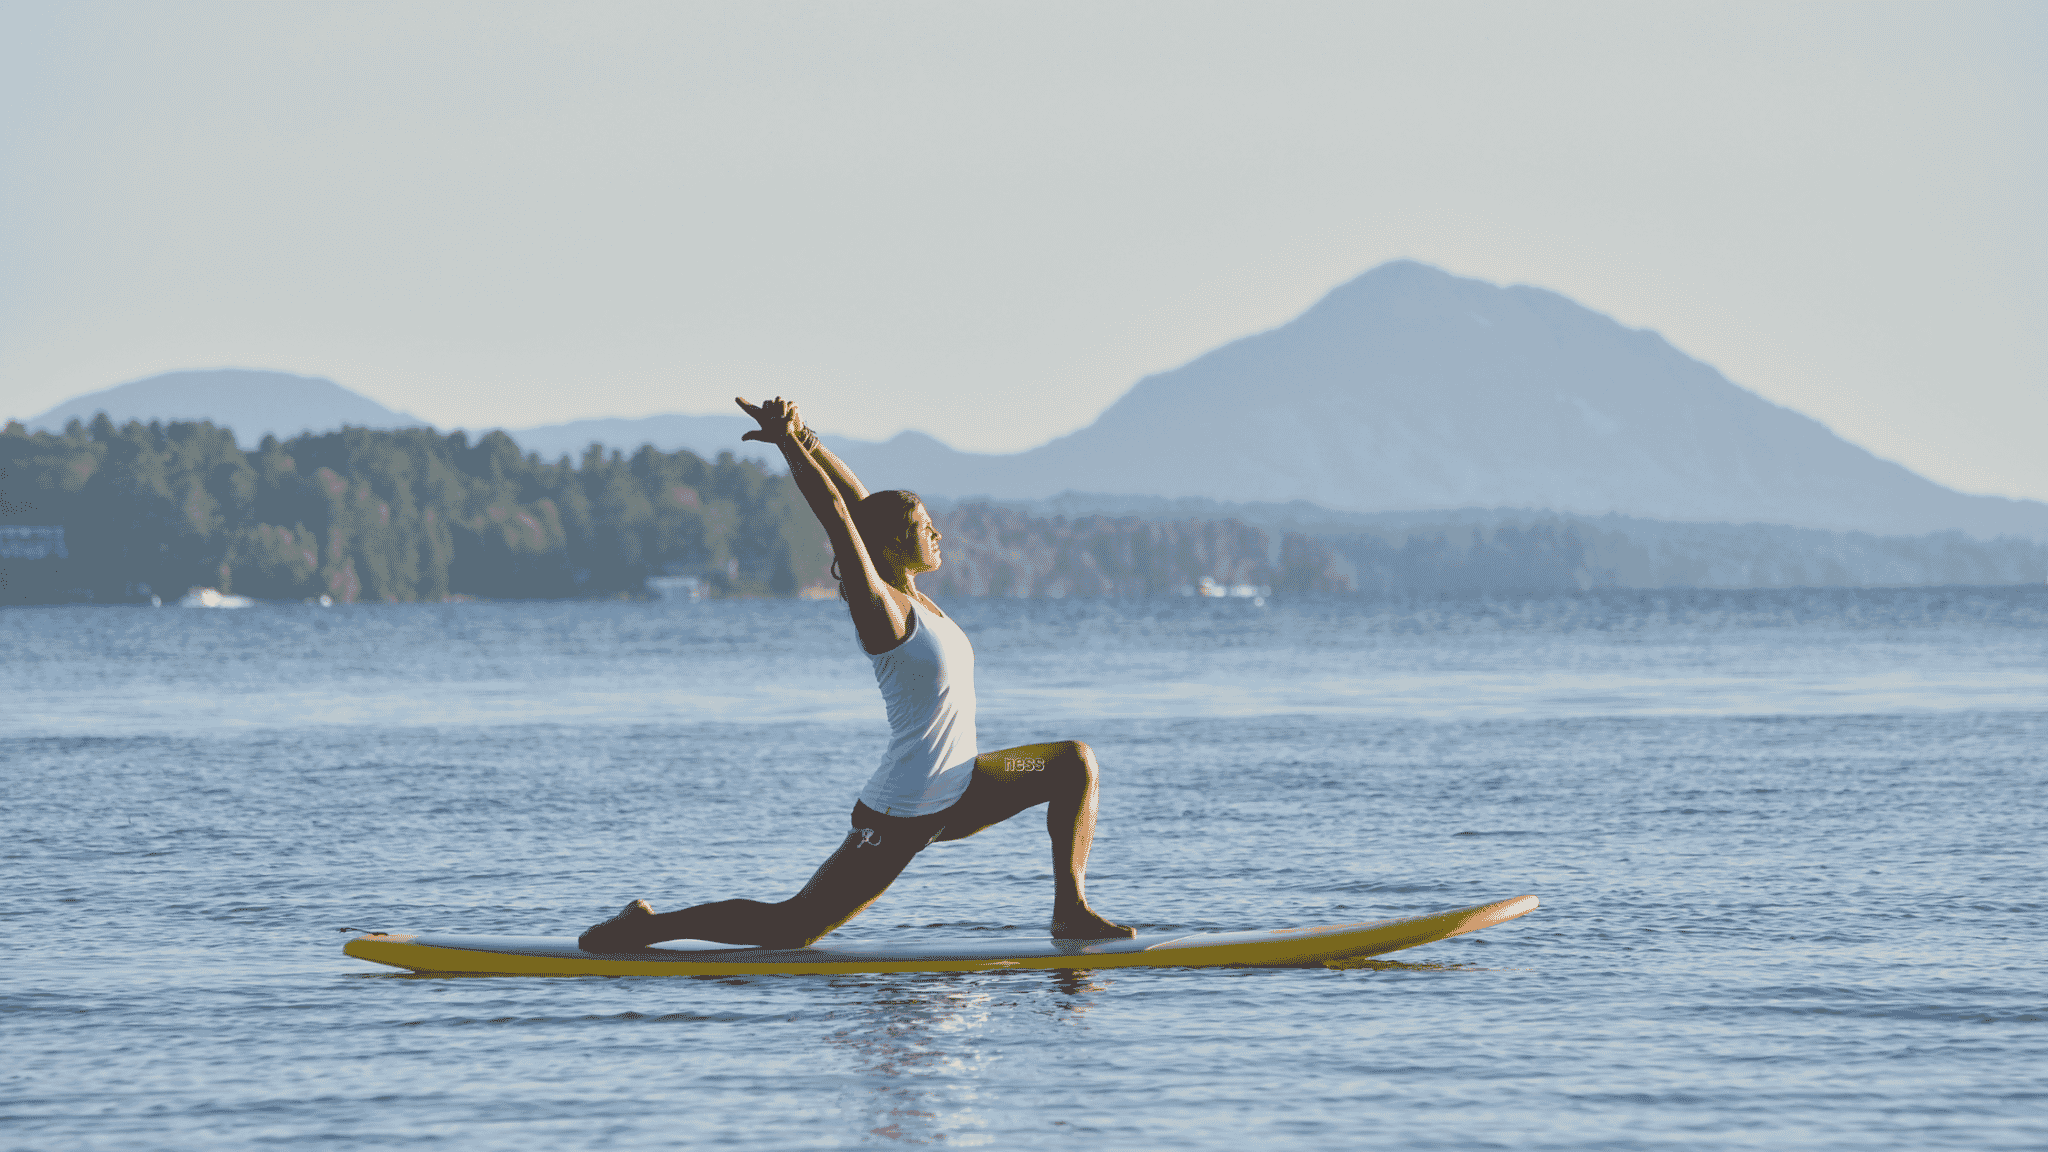 warrior yoga position on paddleboard